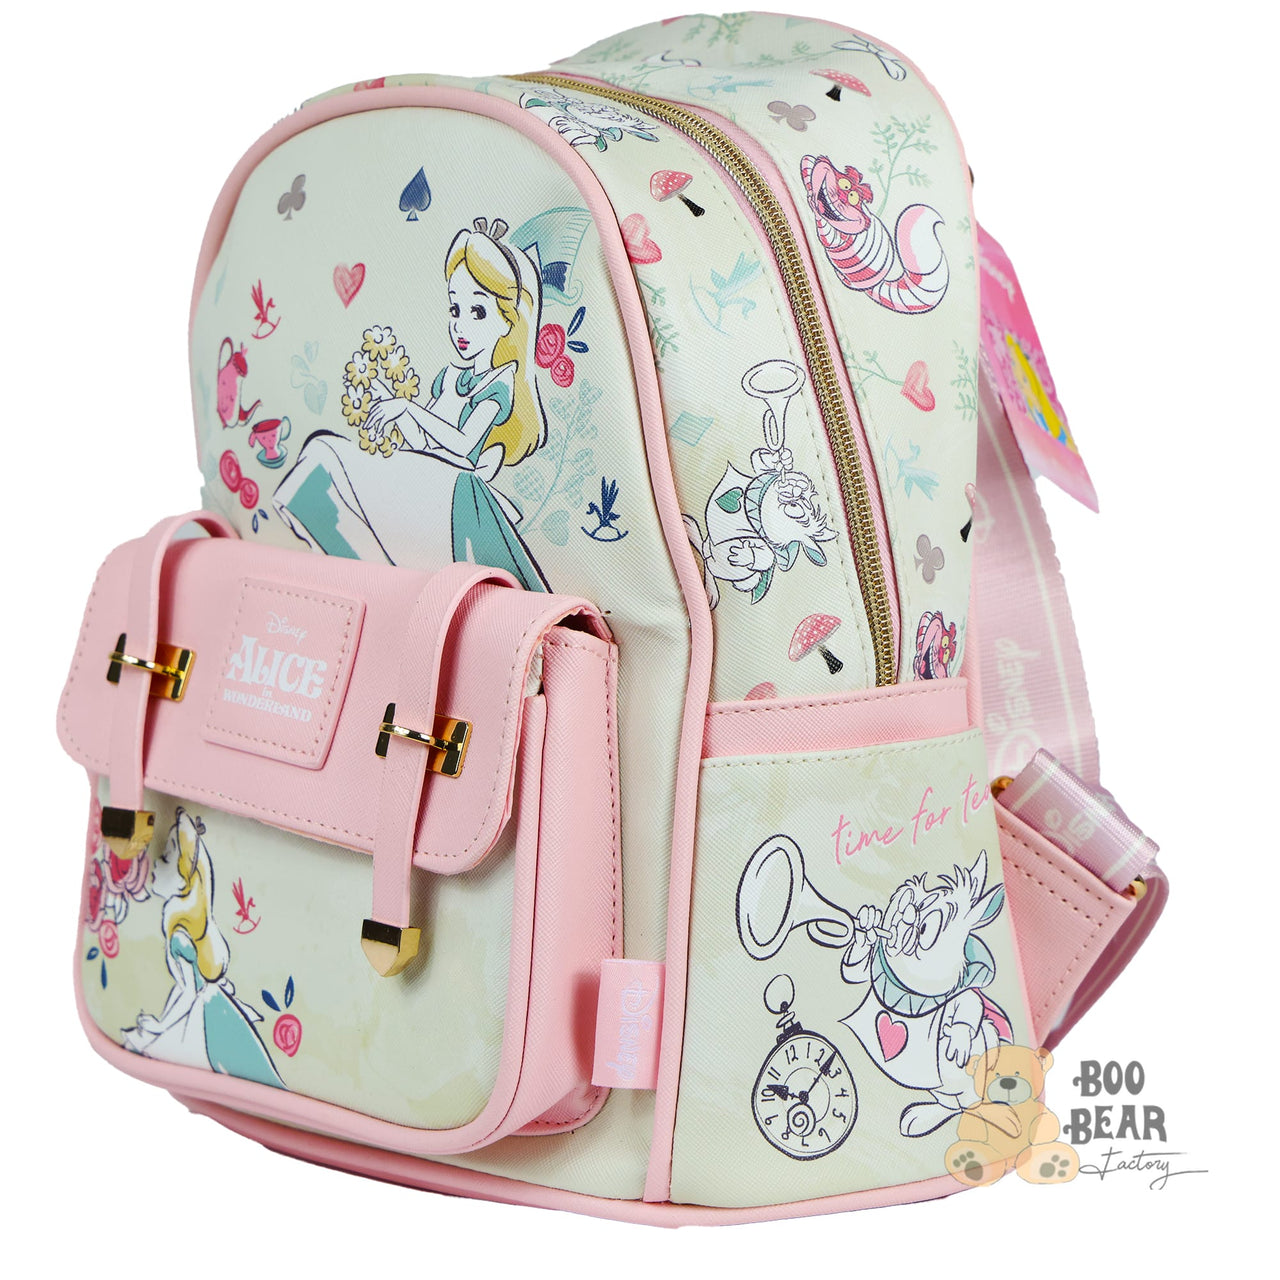 Alice in Wonderland Backpack - Disney BackPacks - $85 - Boobear